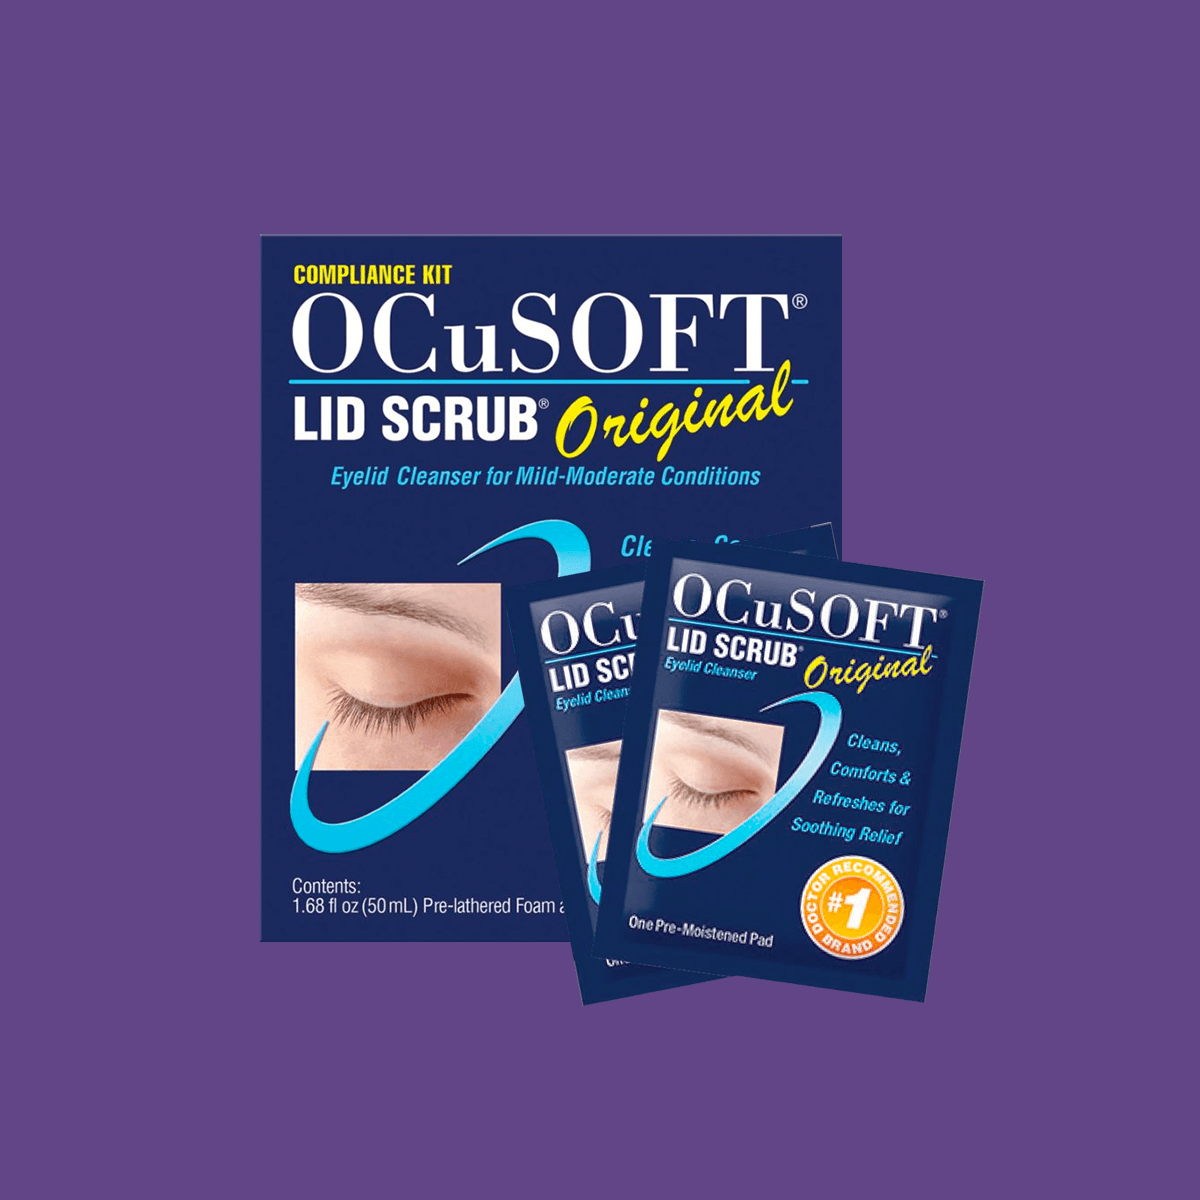 Ocusoft Lid Scrub Original Compliance Kit Foam and Wipes - DryEye Rescue Store